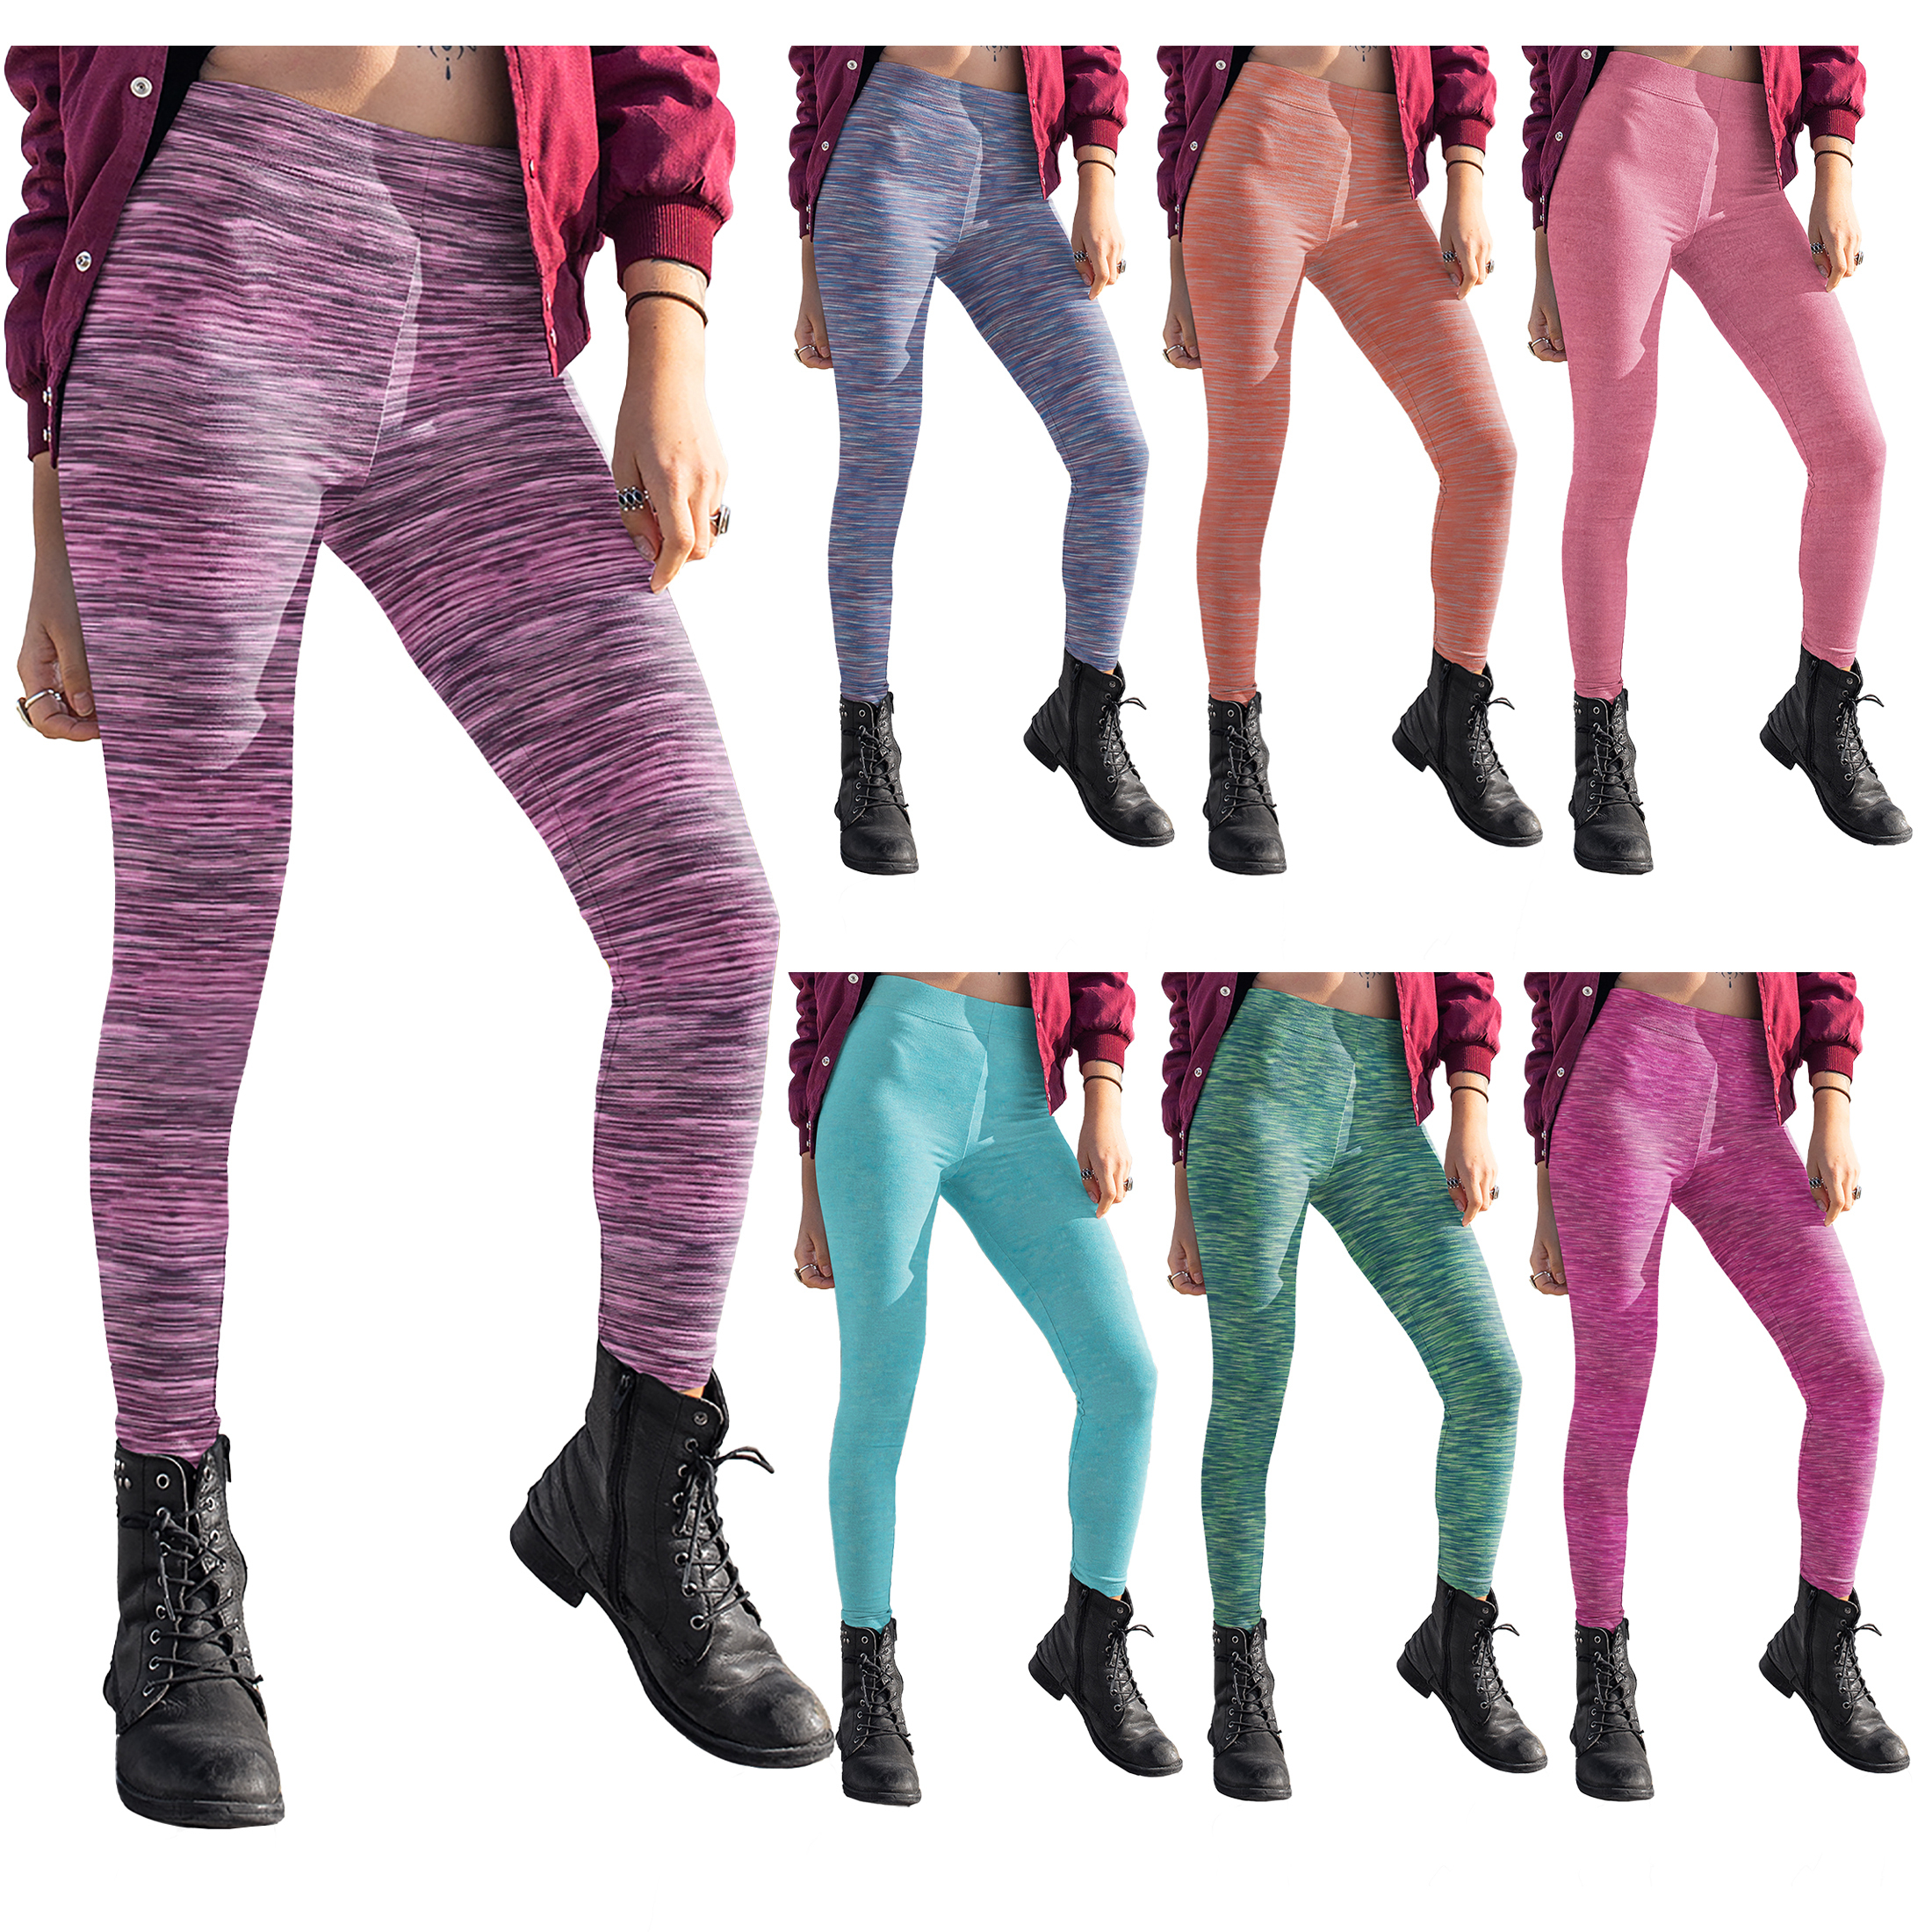 2-Pack: Women's Space Dye Seamless Leggings - Large